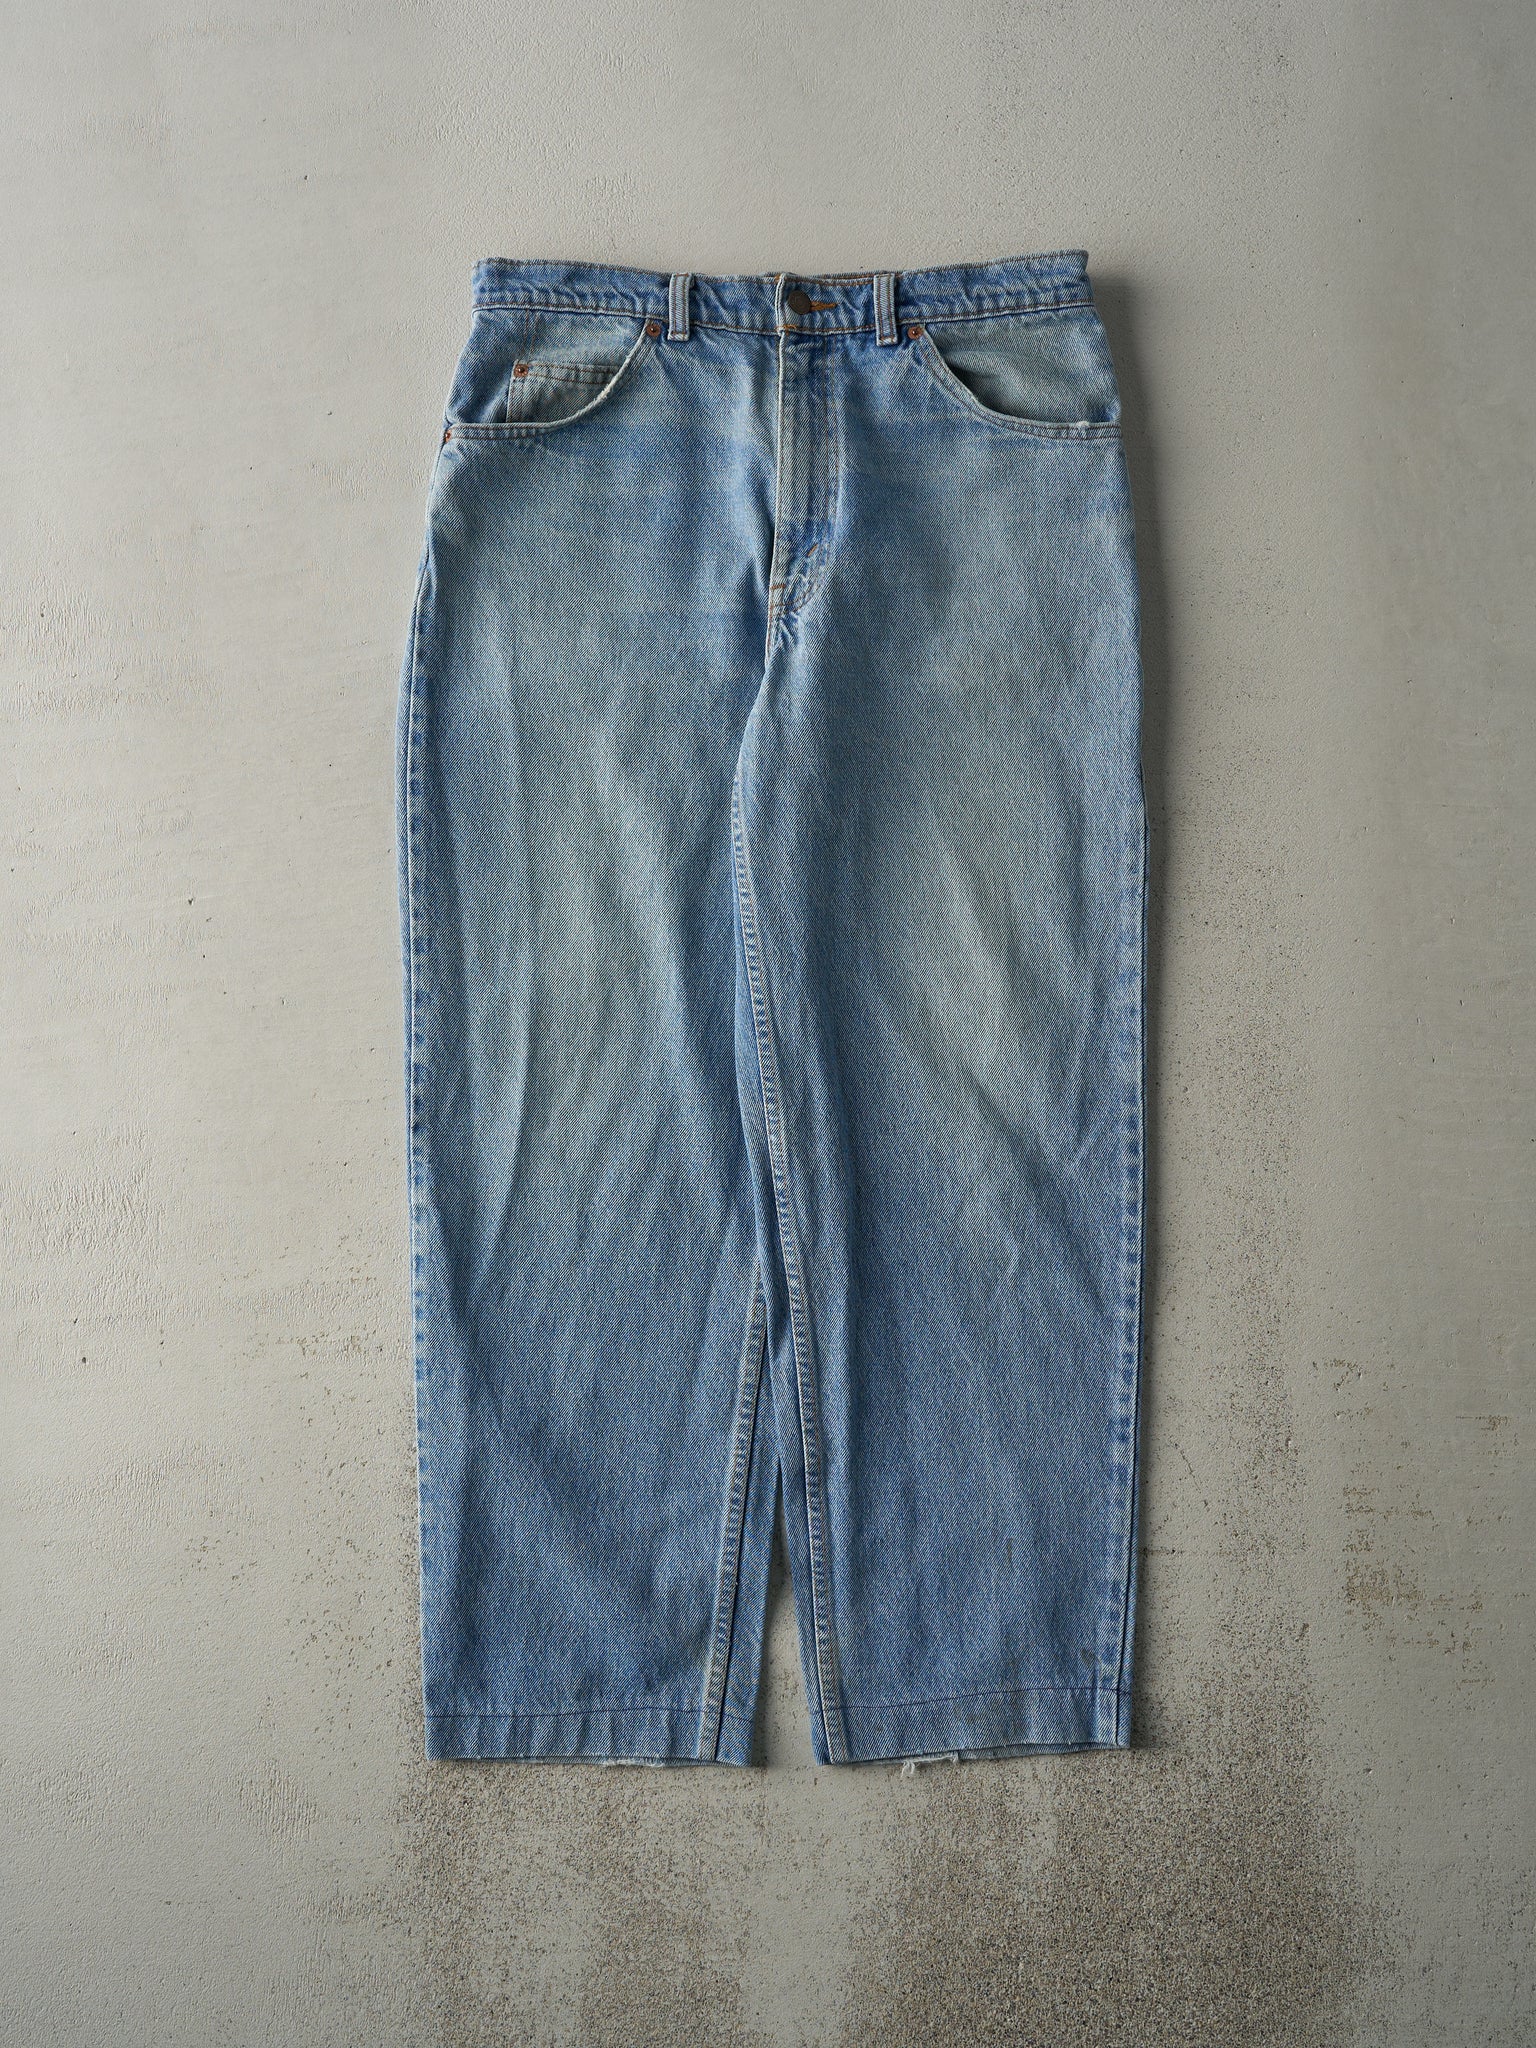 Vintage 80s Light Wash Levi's Orange Tab Jeans (33x28.5)